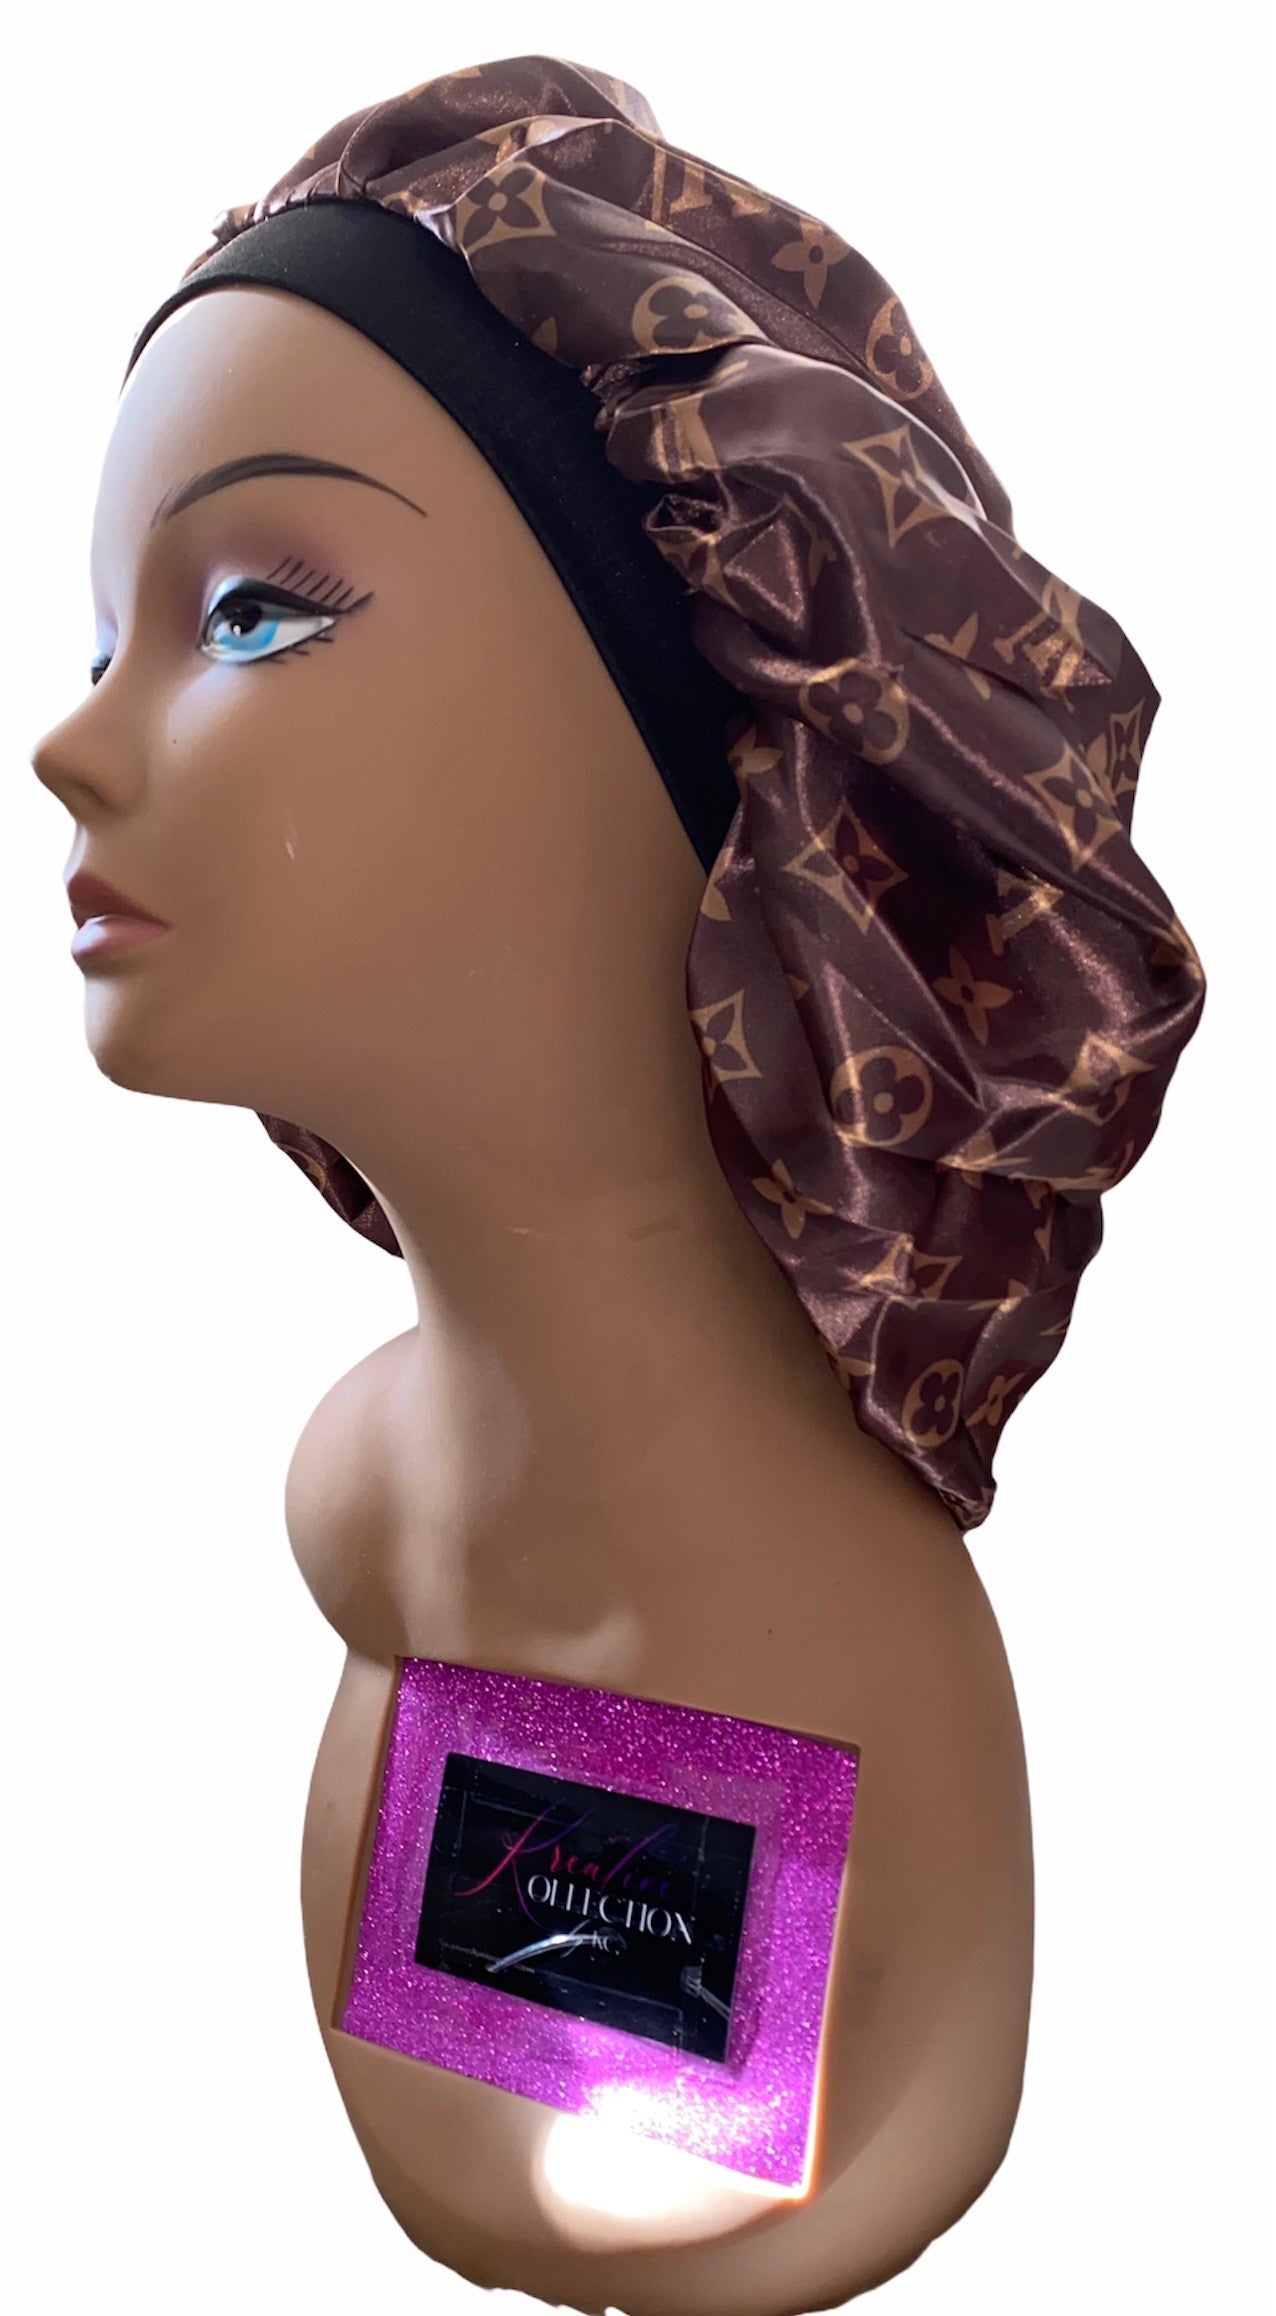 Dark Brown LV Durag Or Oversized Bonnet - Kreative Kollections Boutique